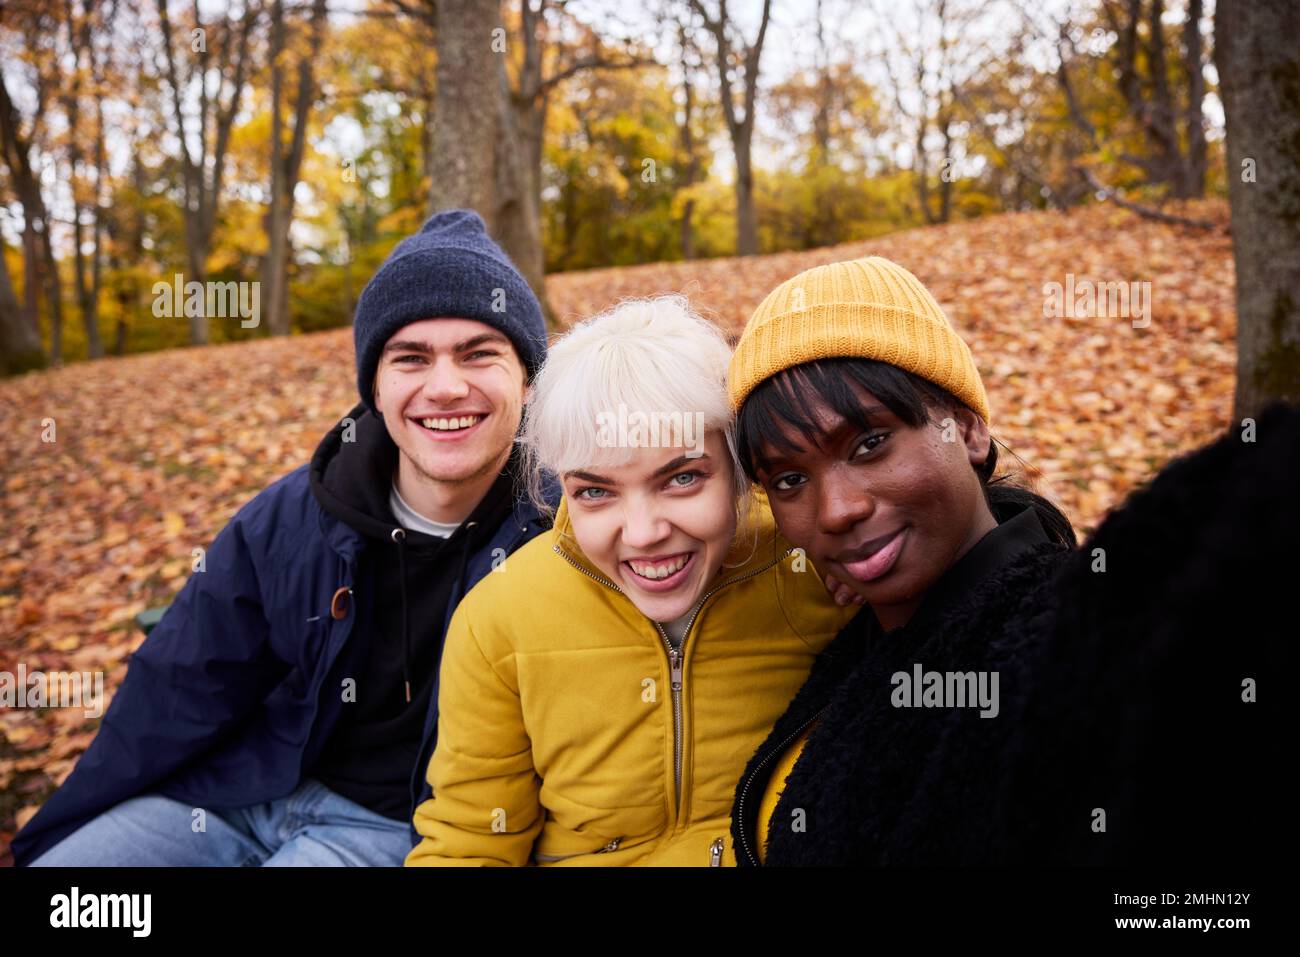 Three friends in park in autumn scenery Stock Photo